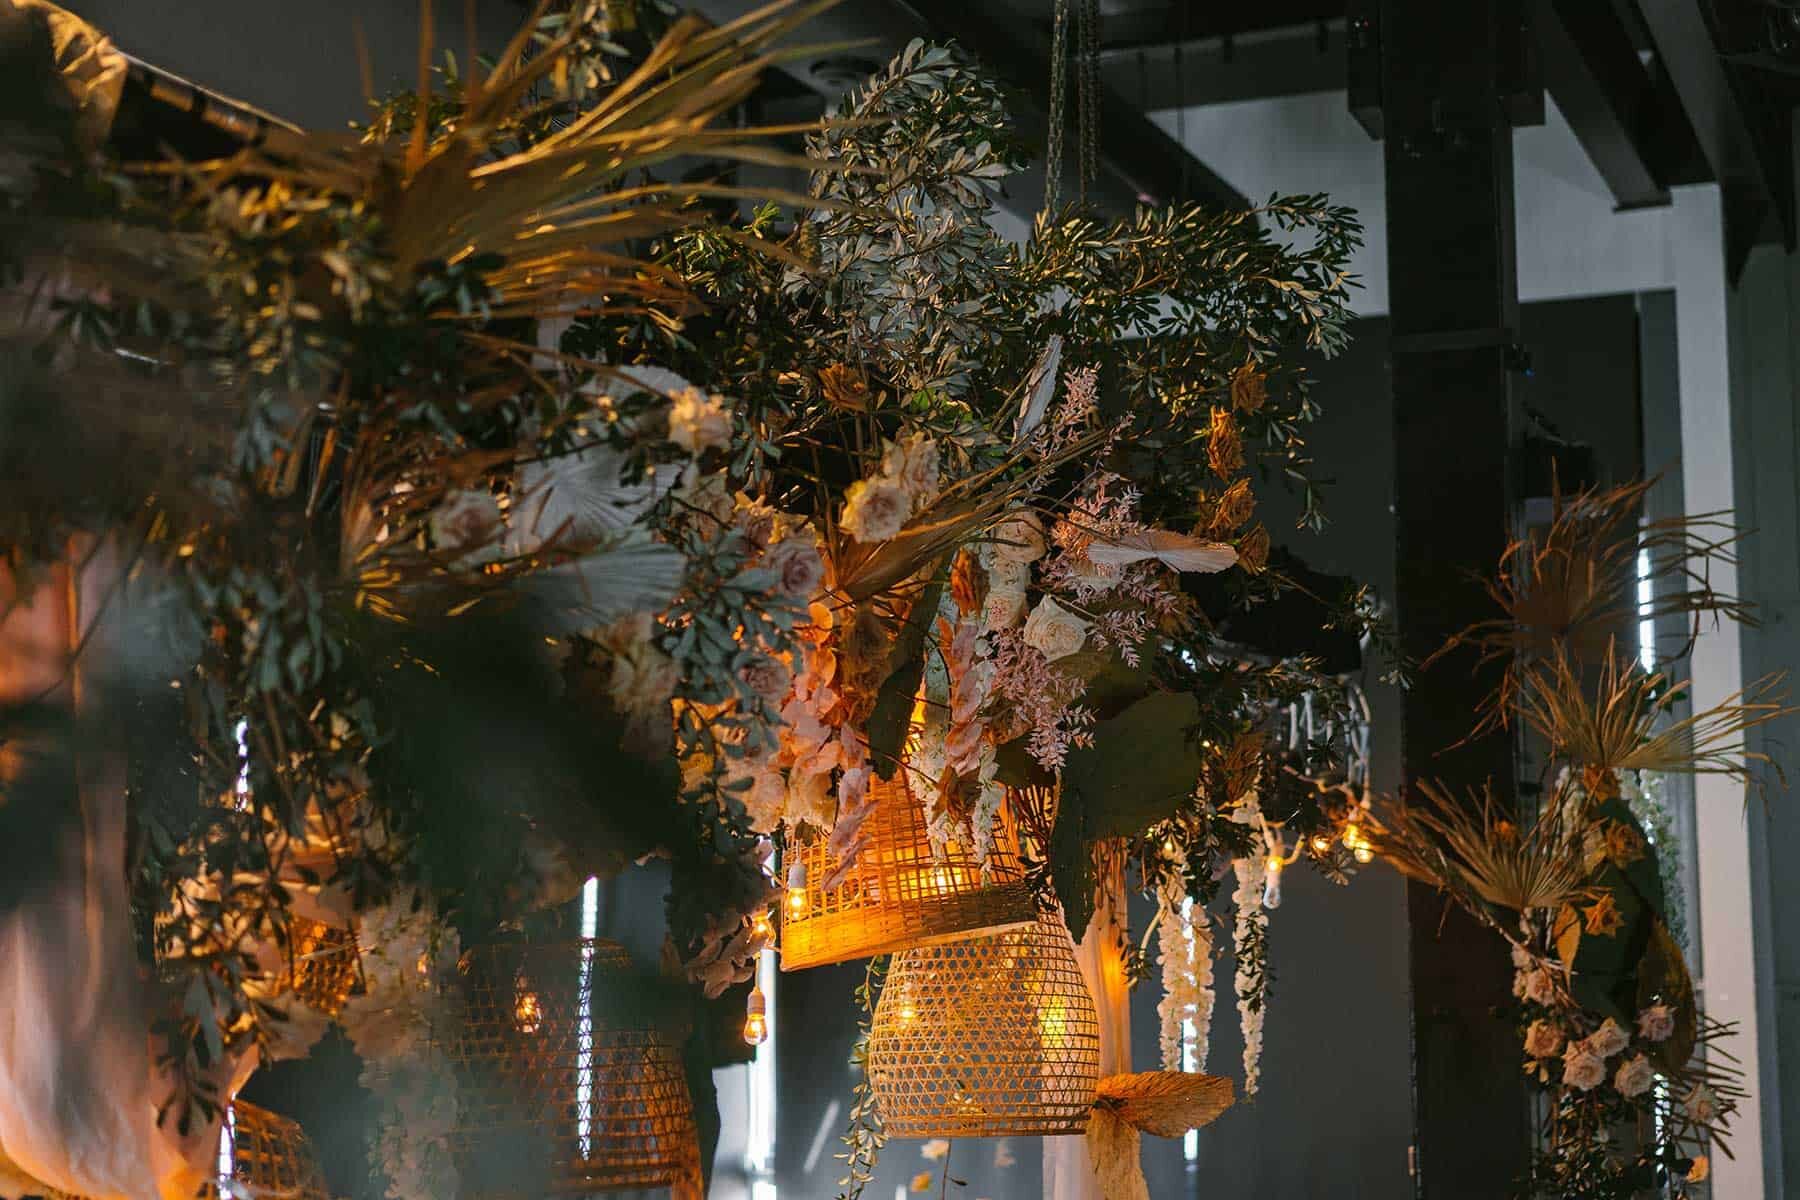 creative Sydney wedding stylist/planner - Upside Down Events